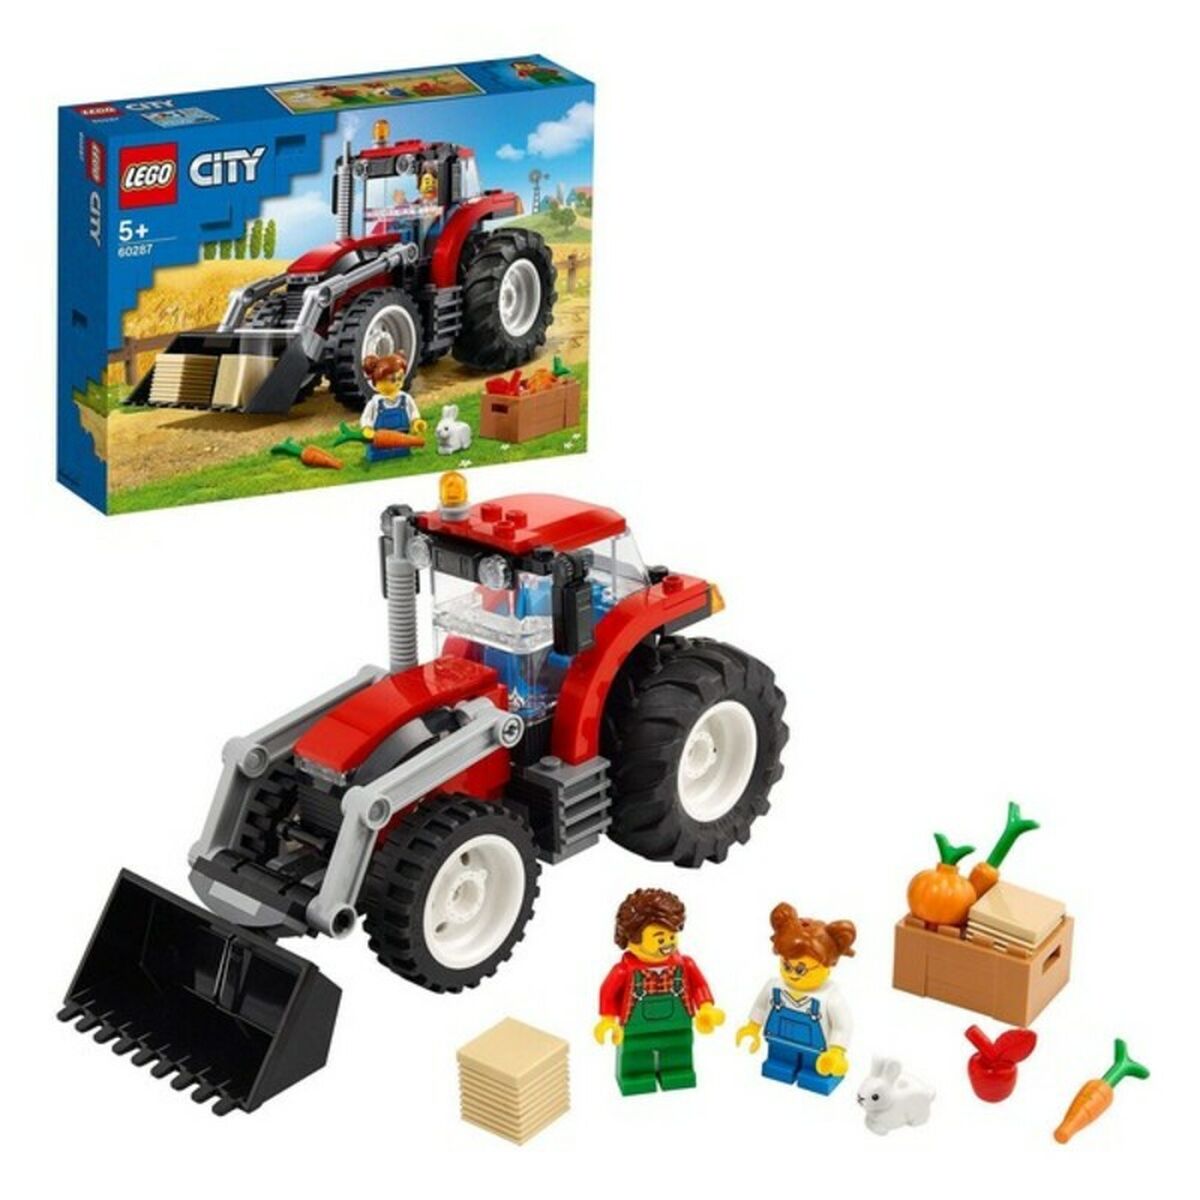 Playset City Great Vehicles Traktor Lego 60287 (148 PCs)